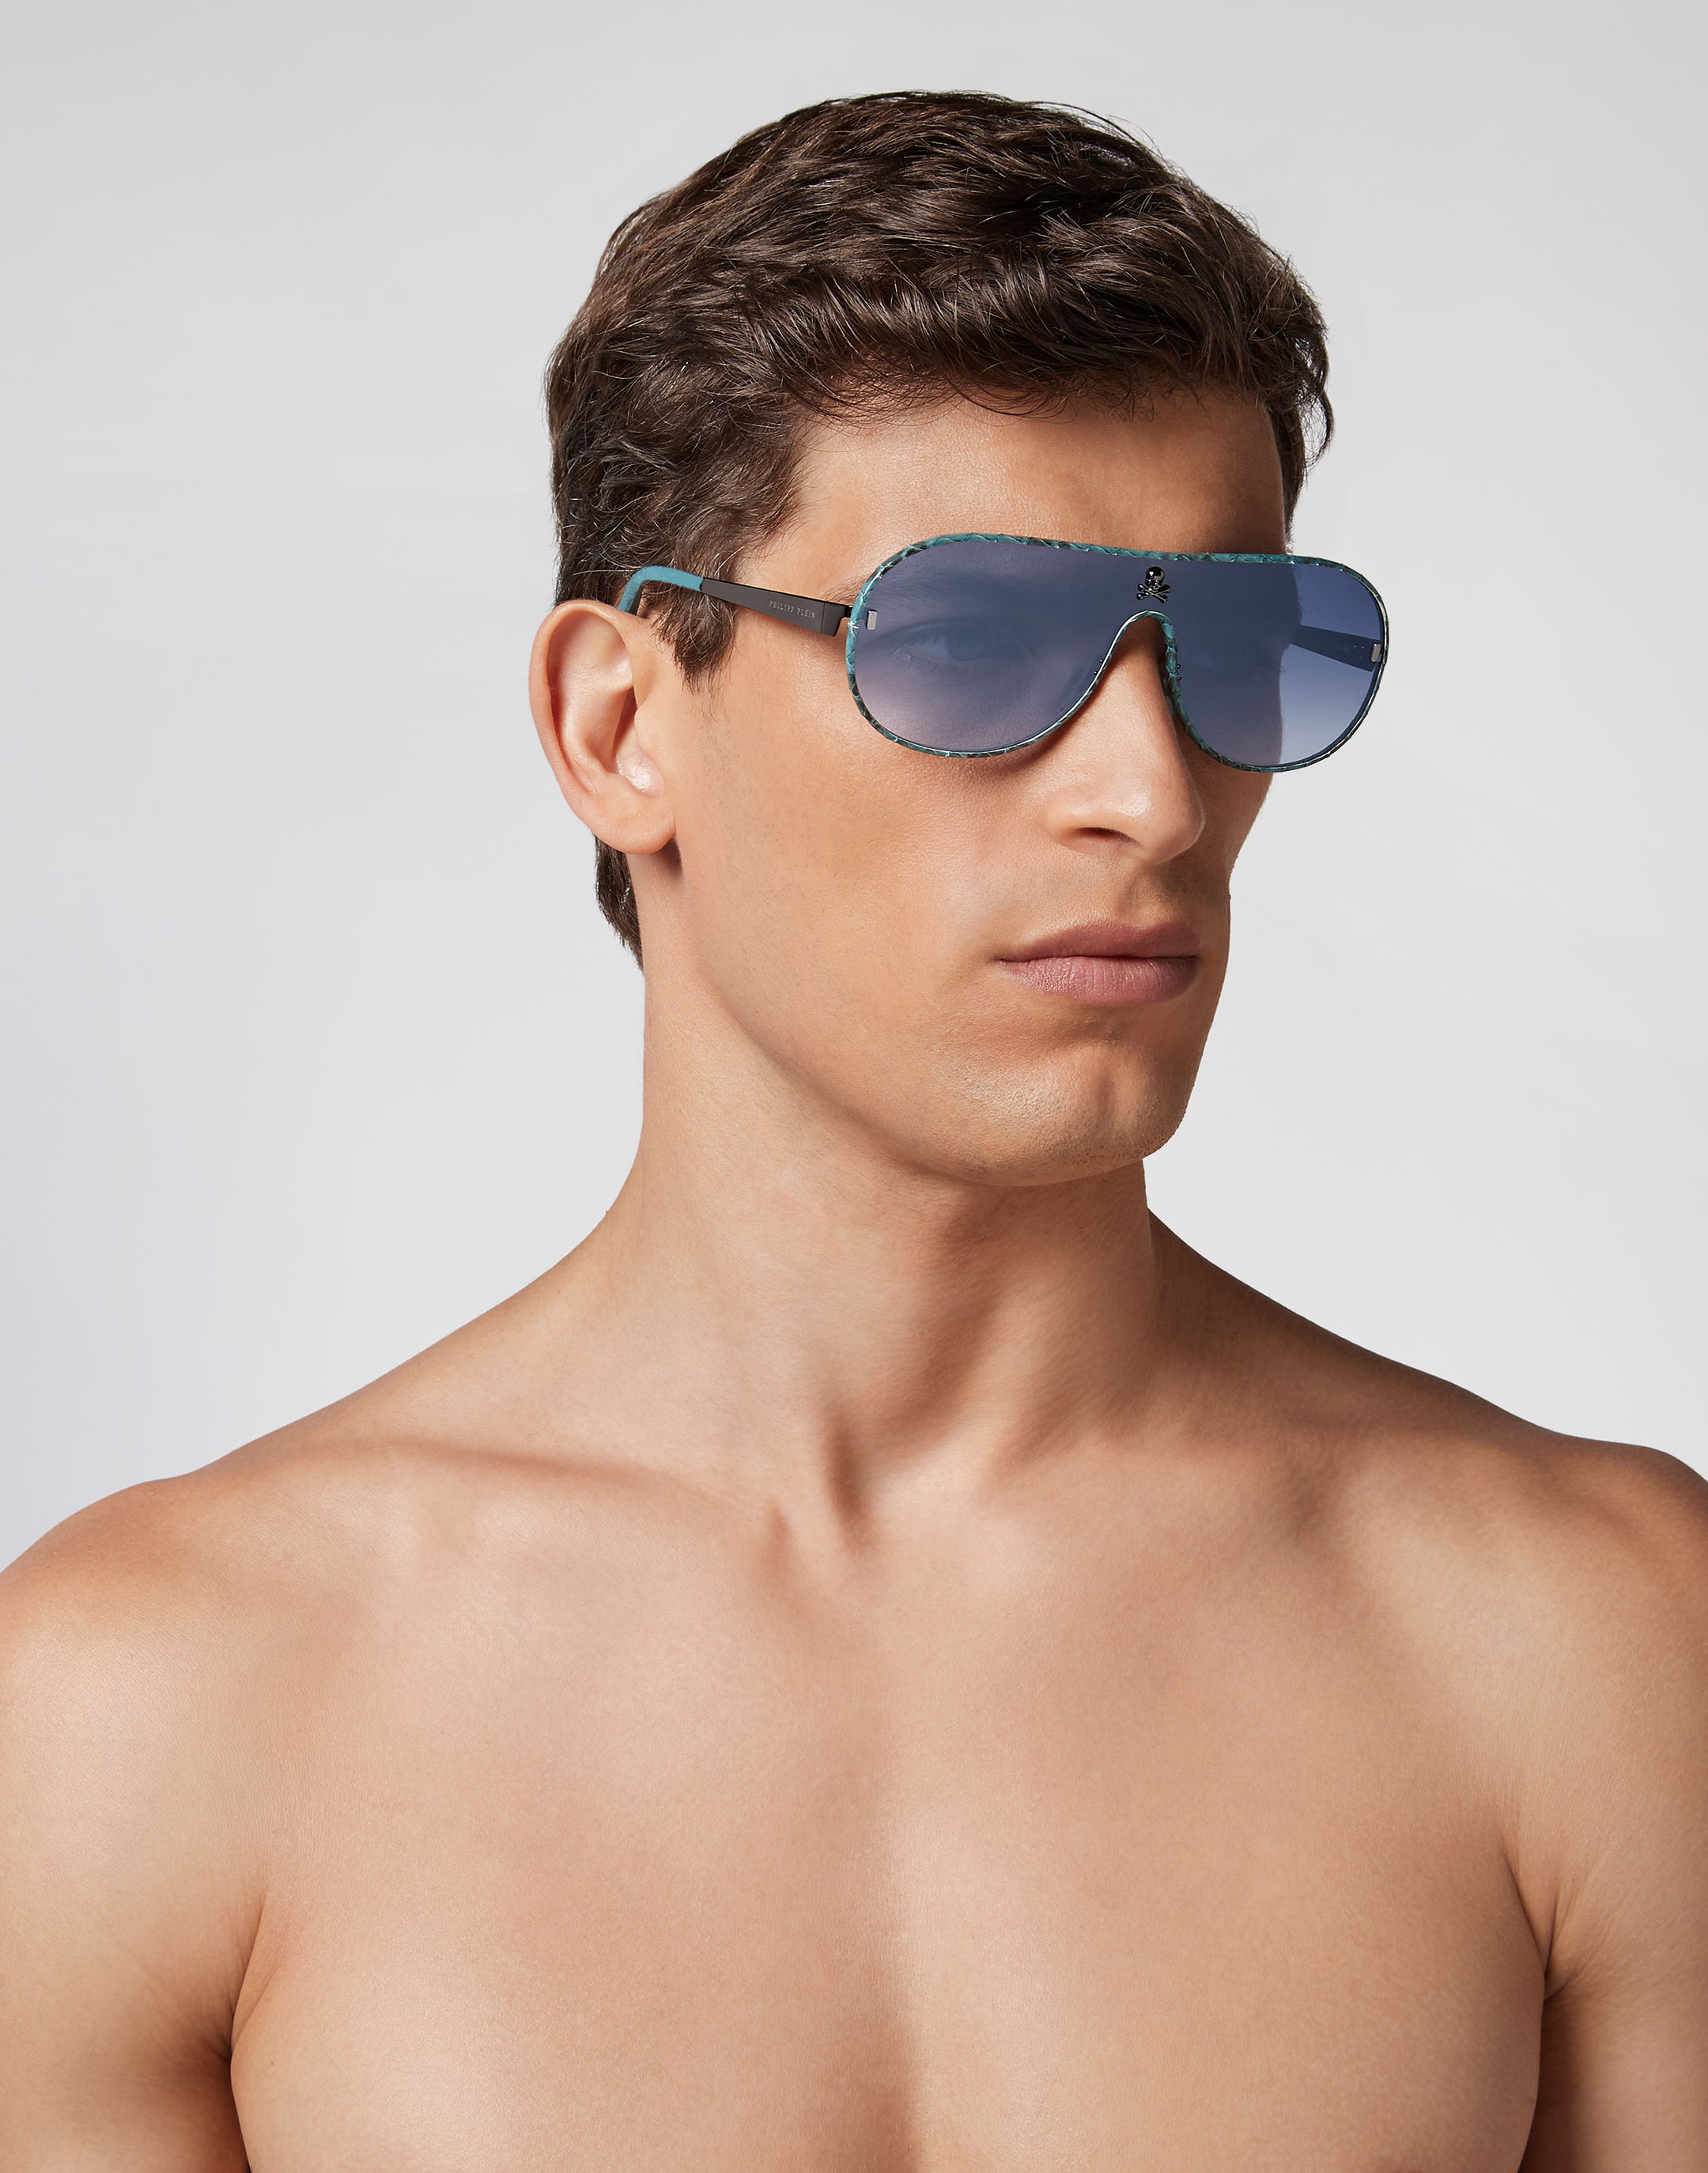 Sunglasses Target Leather Outlet Plein | Philipp